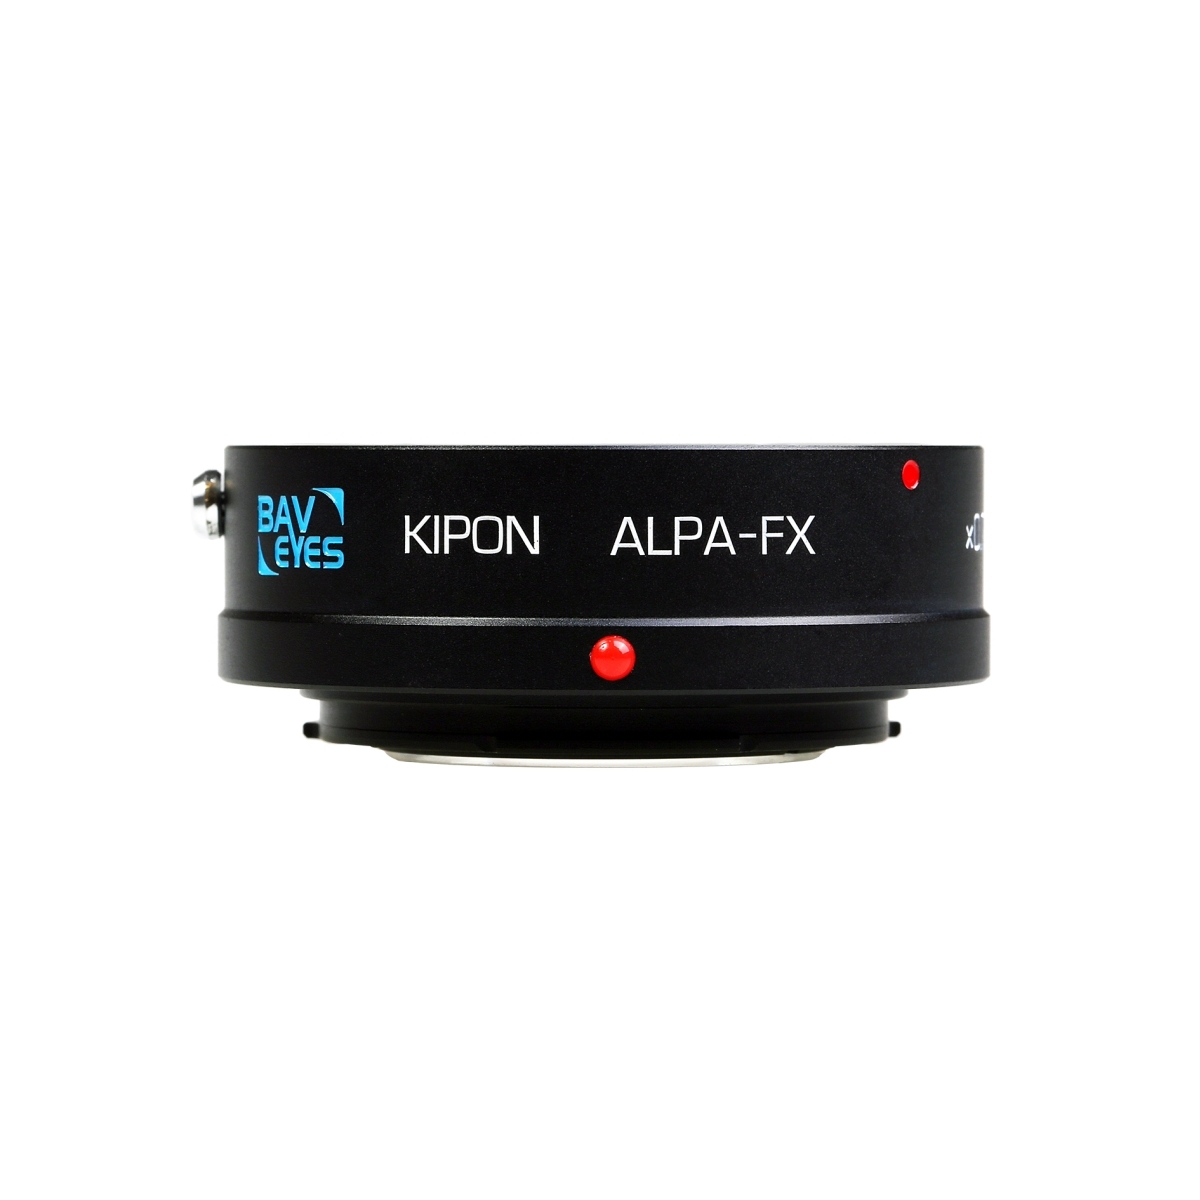 Baveyes Adapter für ALPA auf Fuji X (0.7x)